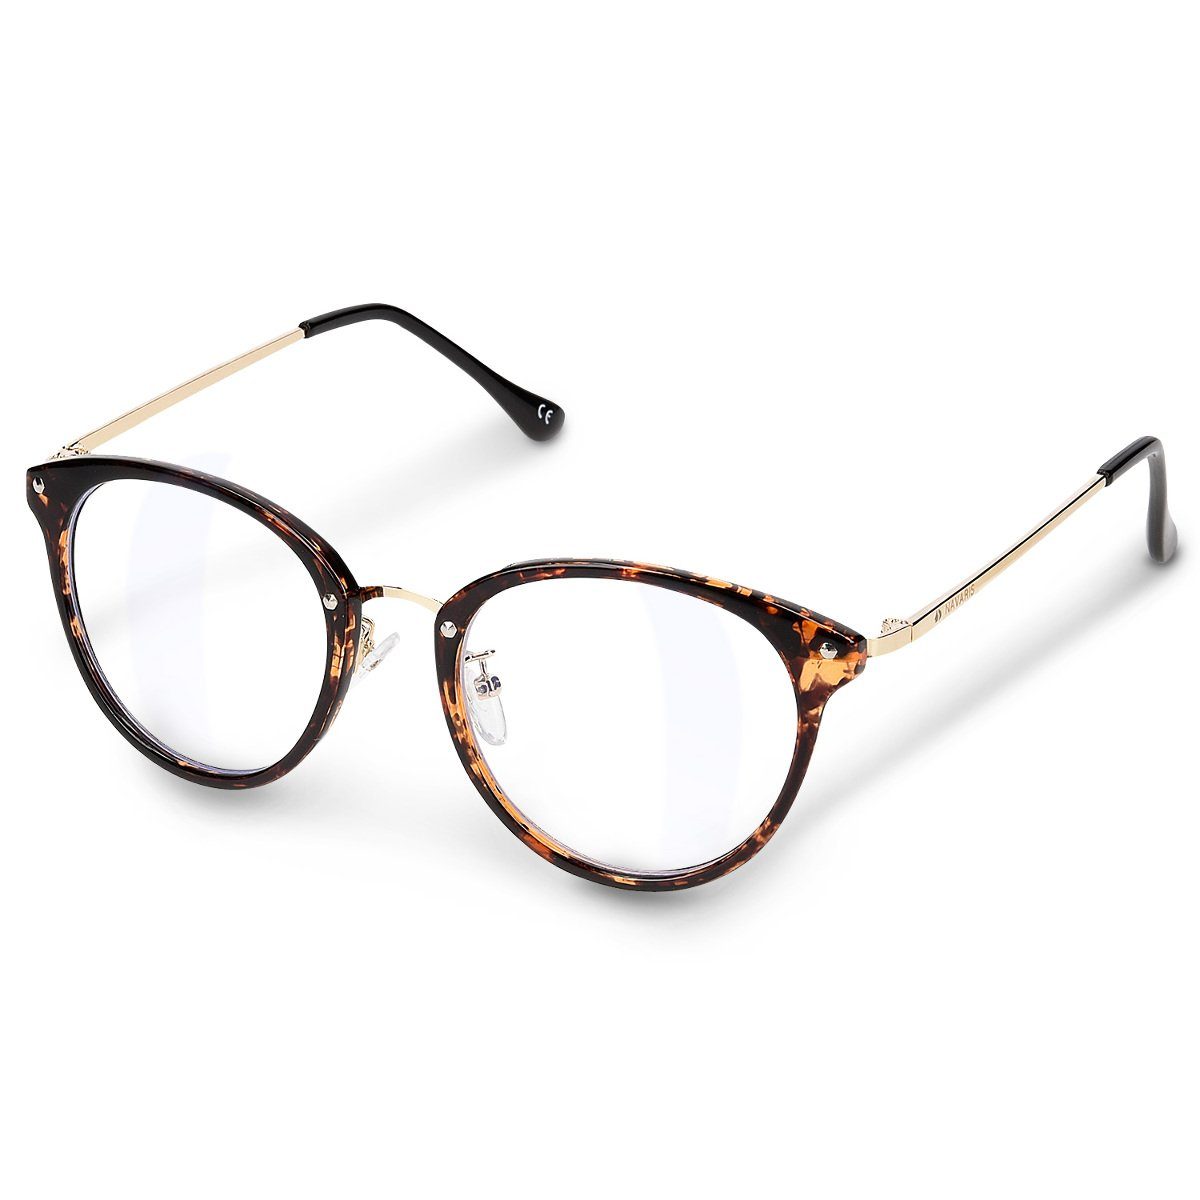 Bvlgari Retro Brille hellgrau-goldfarben Casual-Look Accessoires Sonnenbrillen Retro Brillen 